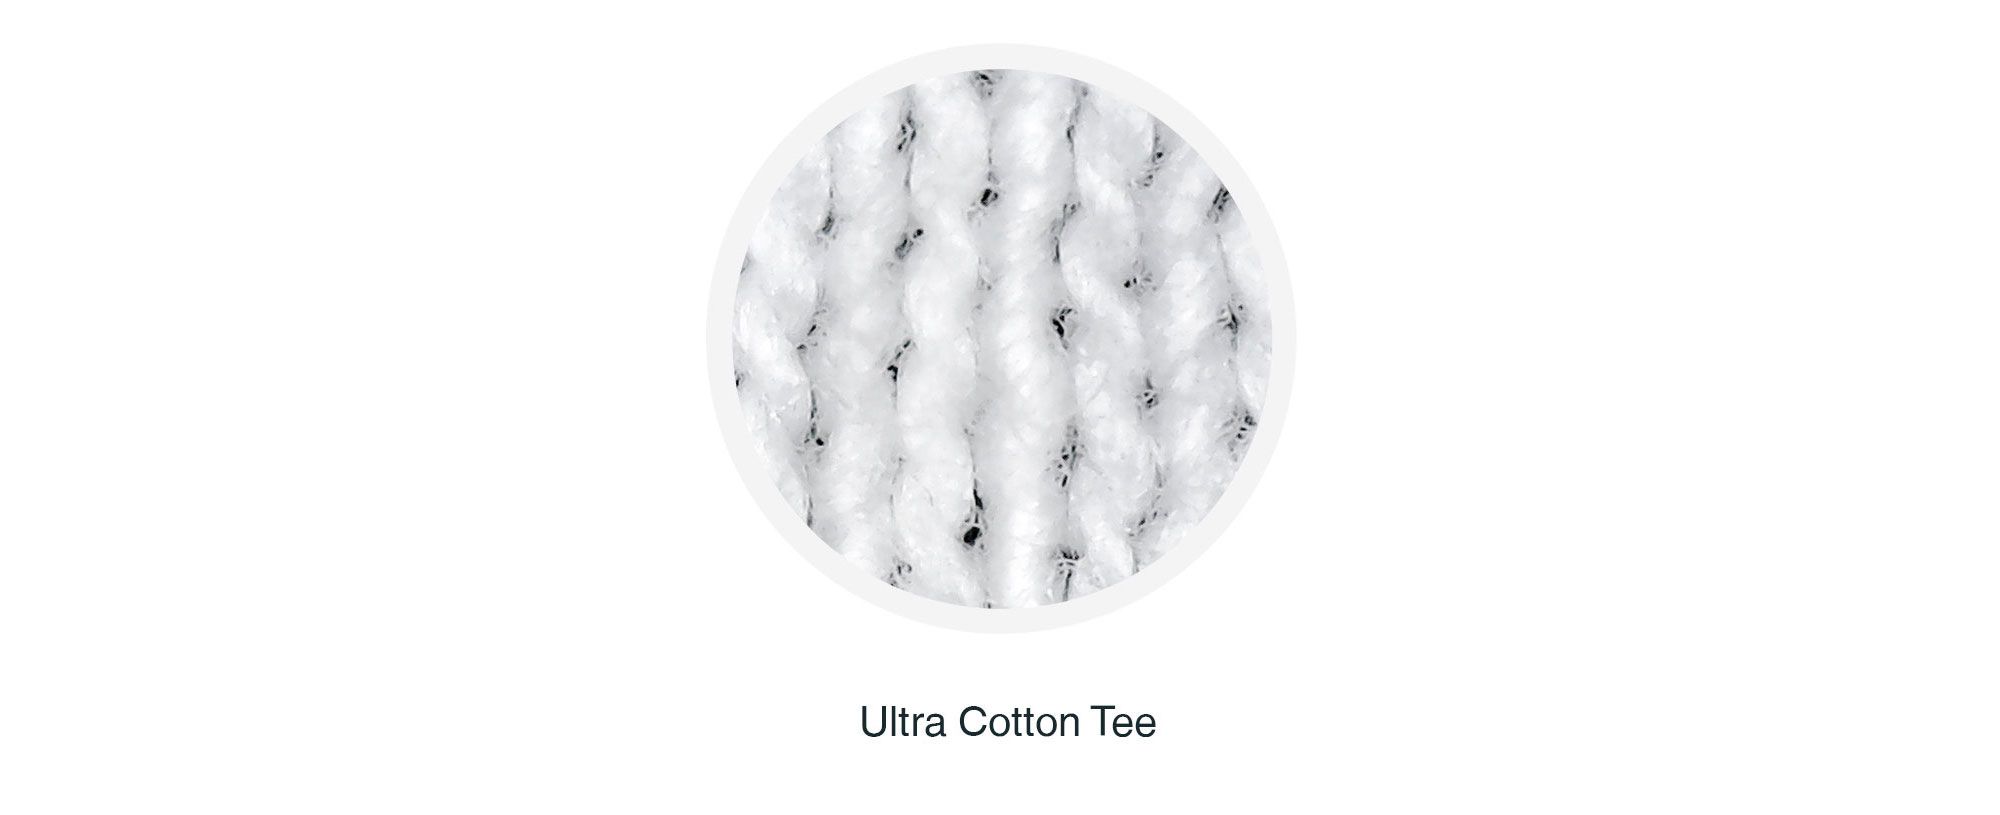 A microscope image of a Gildan Ultra Cotton Tee.